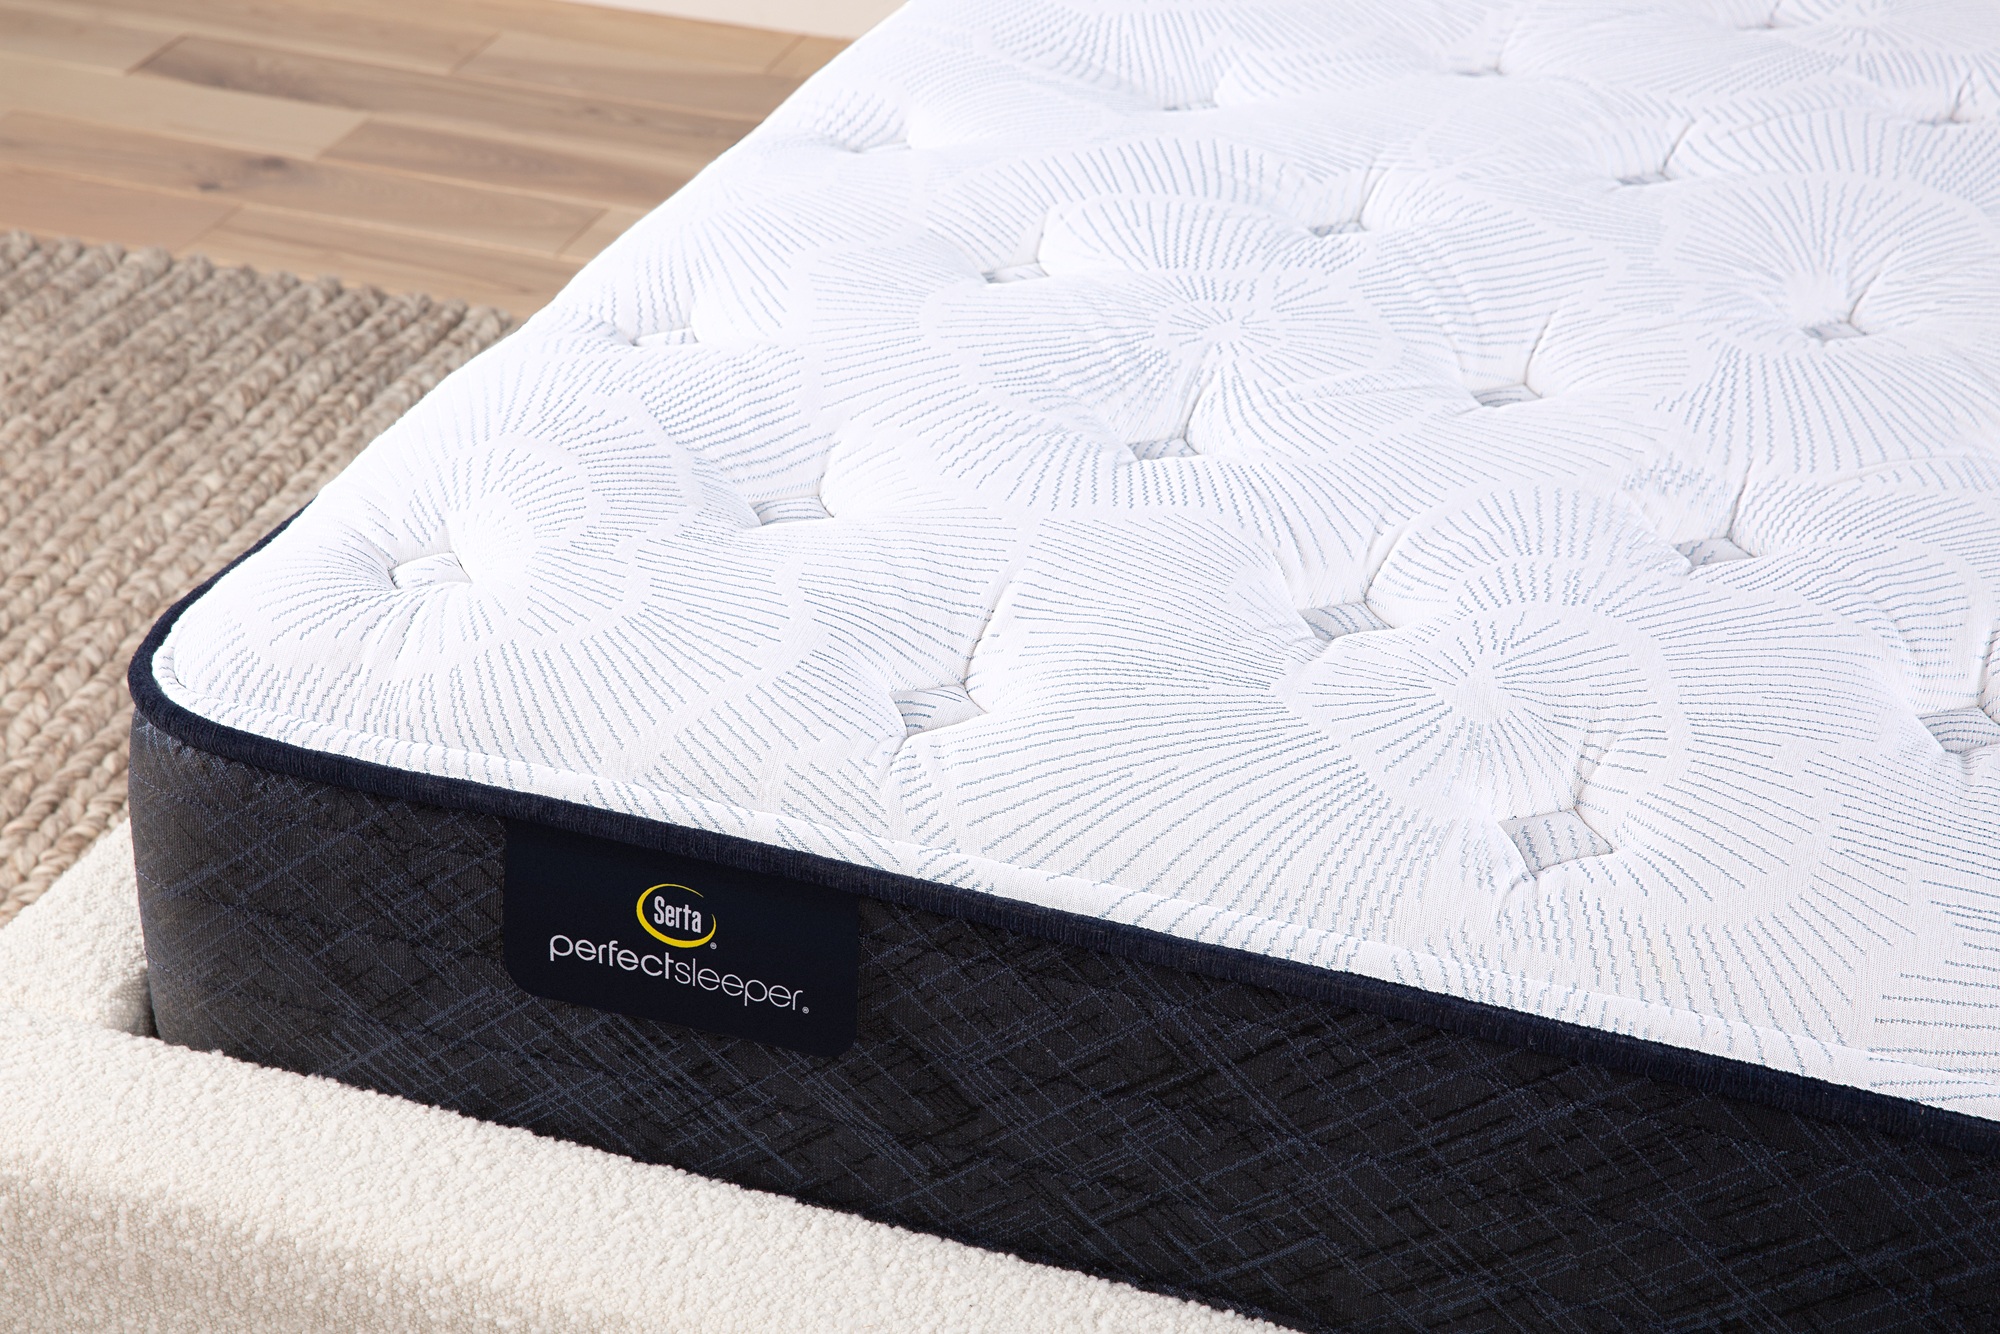 Photo of the Serta Perfect Sleeper Adoring Night Plush mattress.